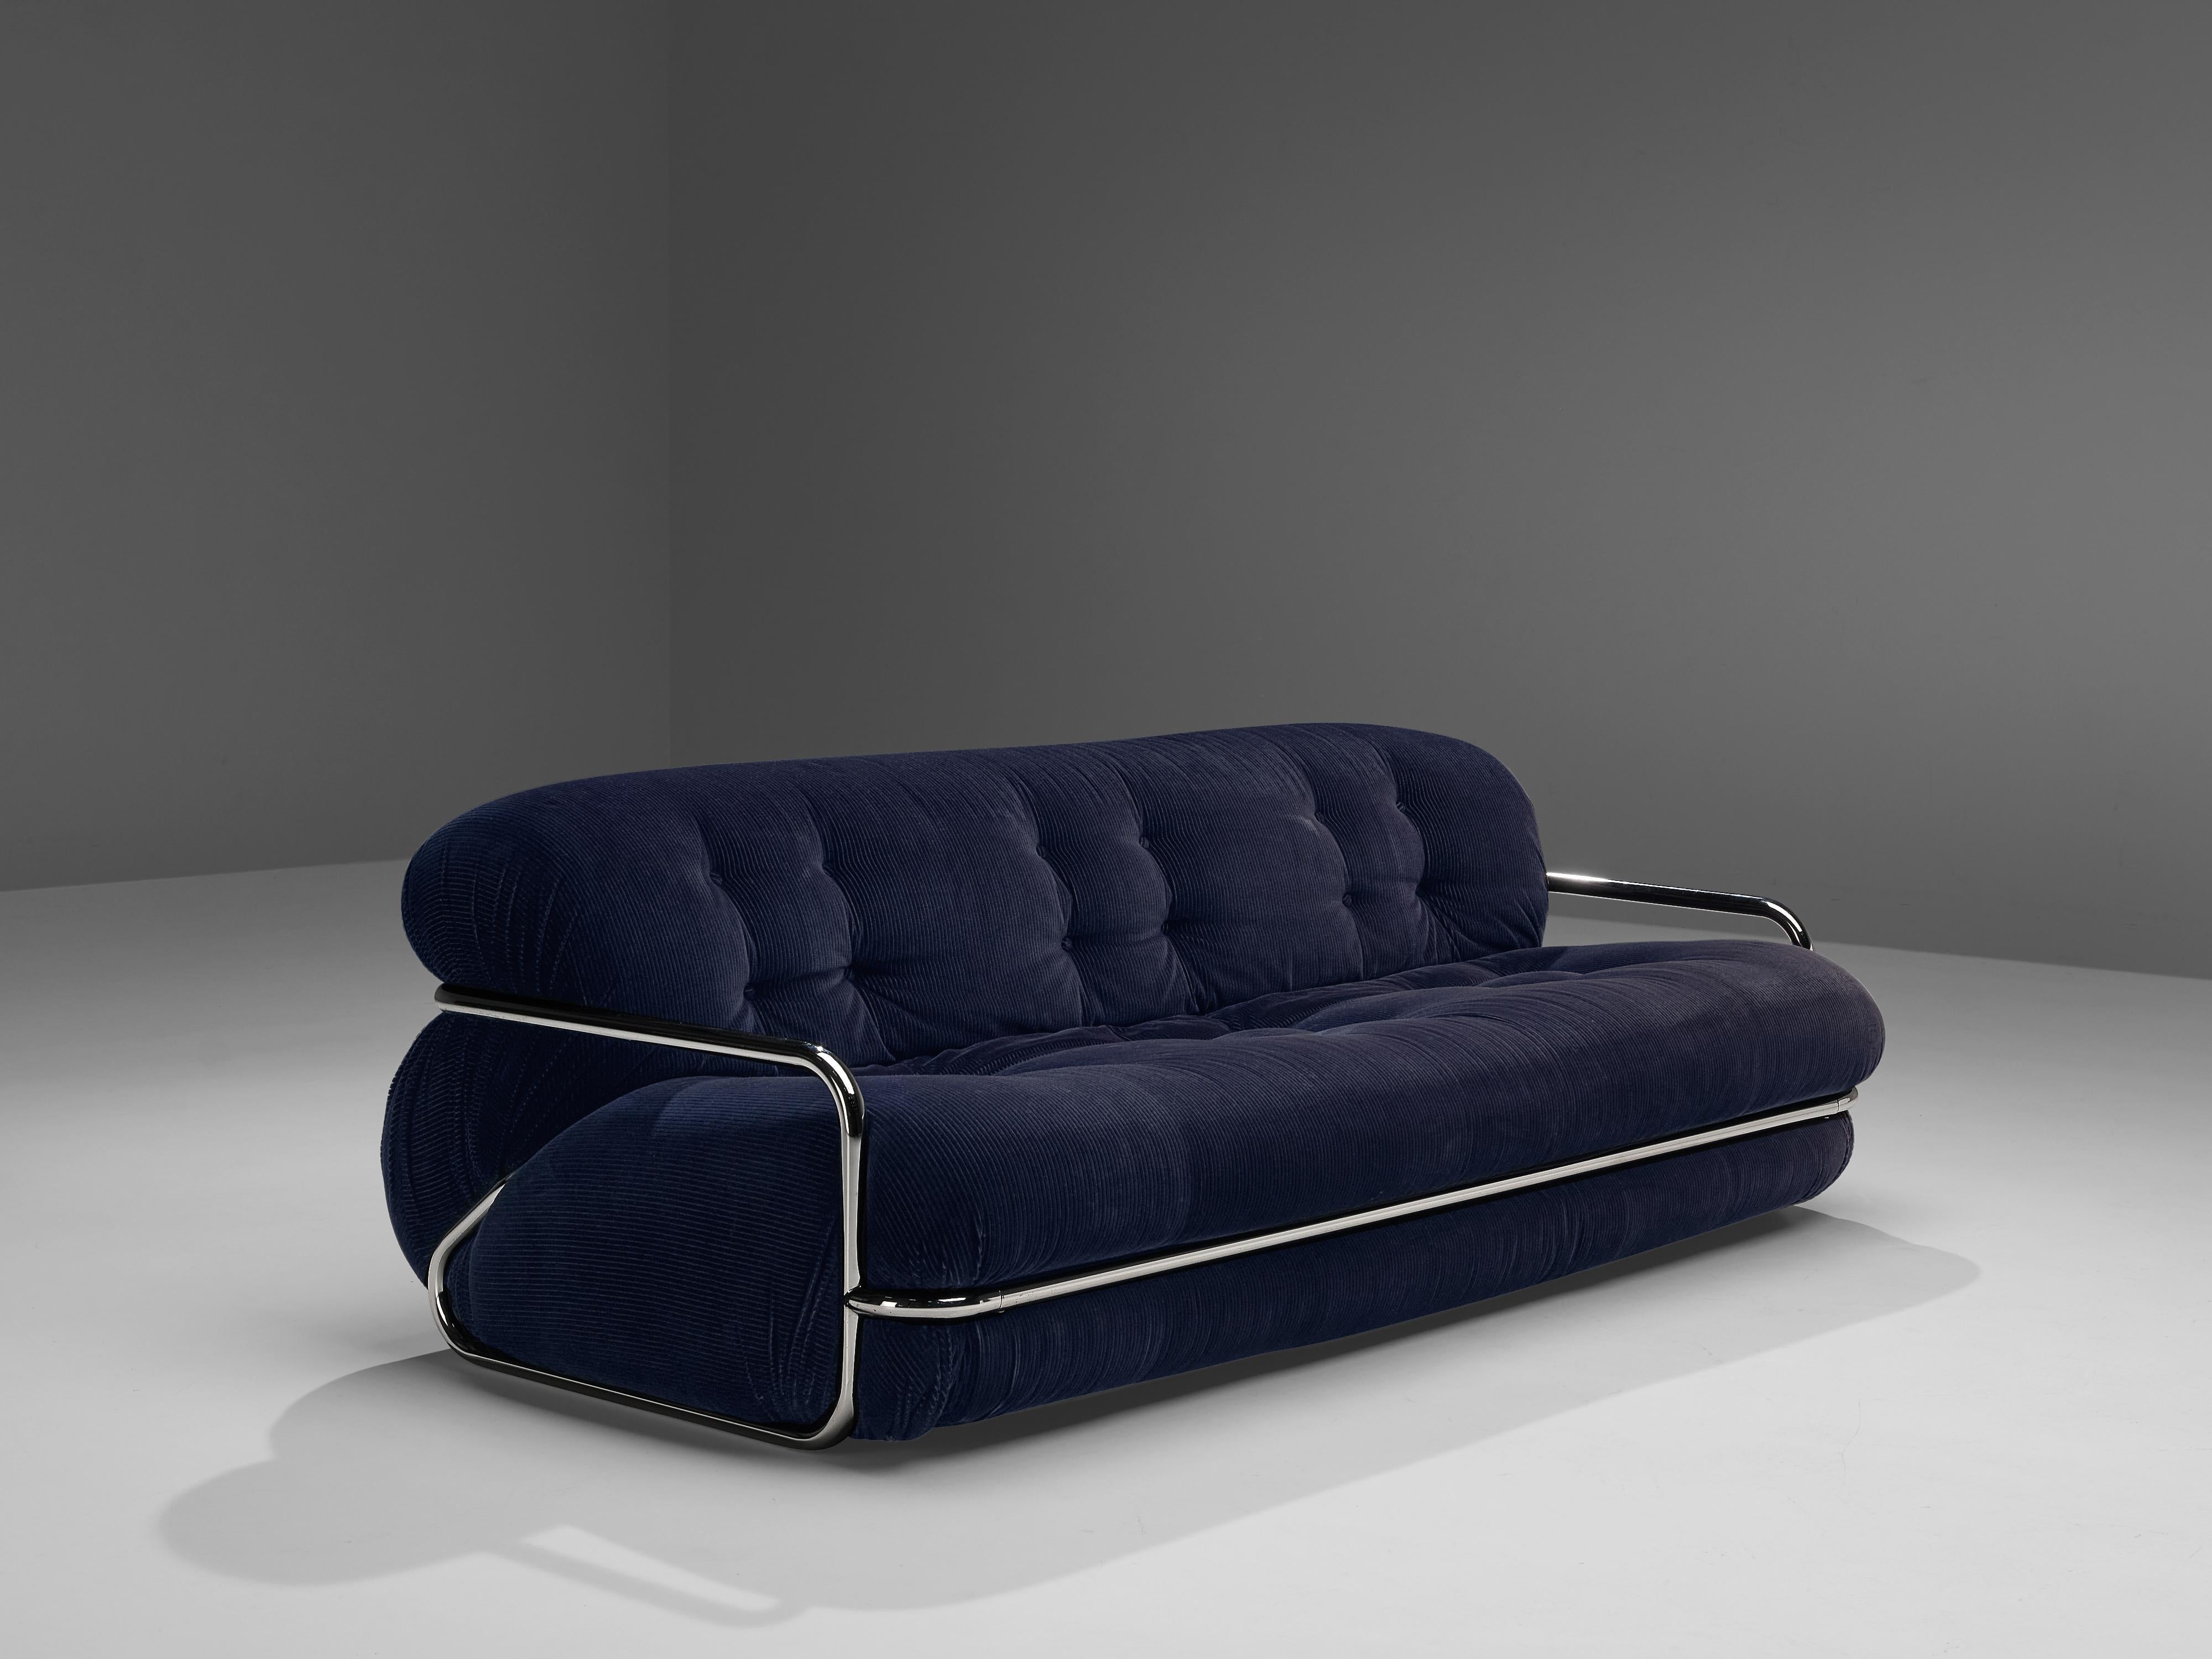 Mid-Century Modern Italian Sofa with Tubular Chrome Frame in Dark Blue Corduroy Upholstery